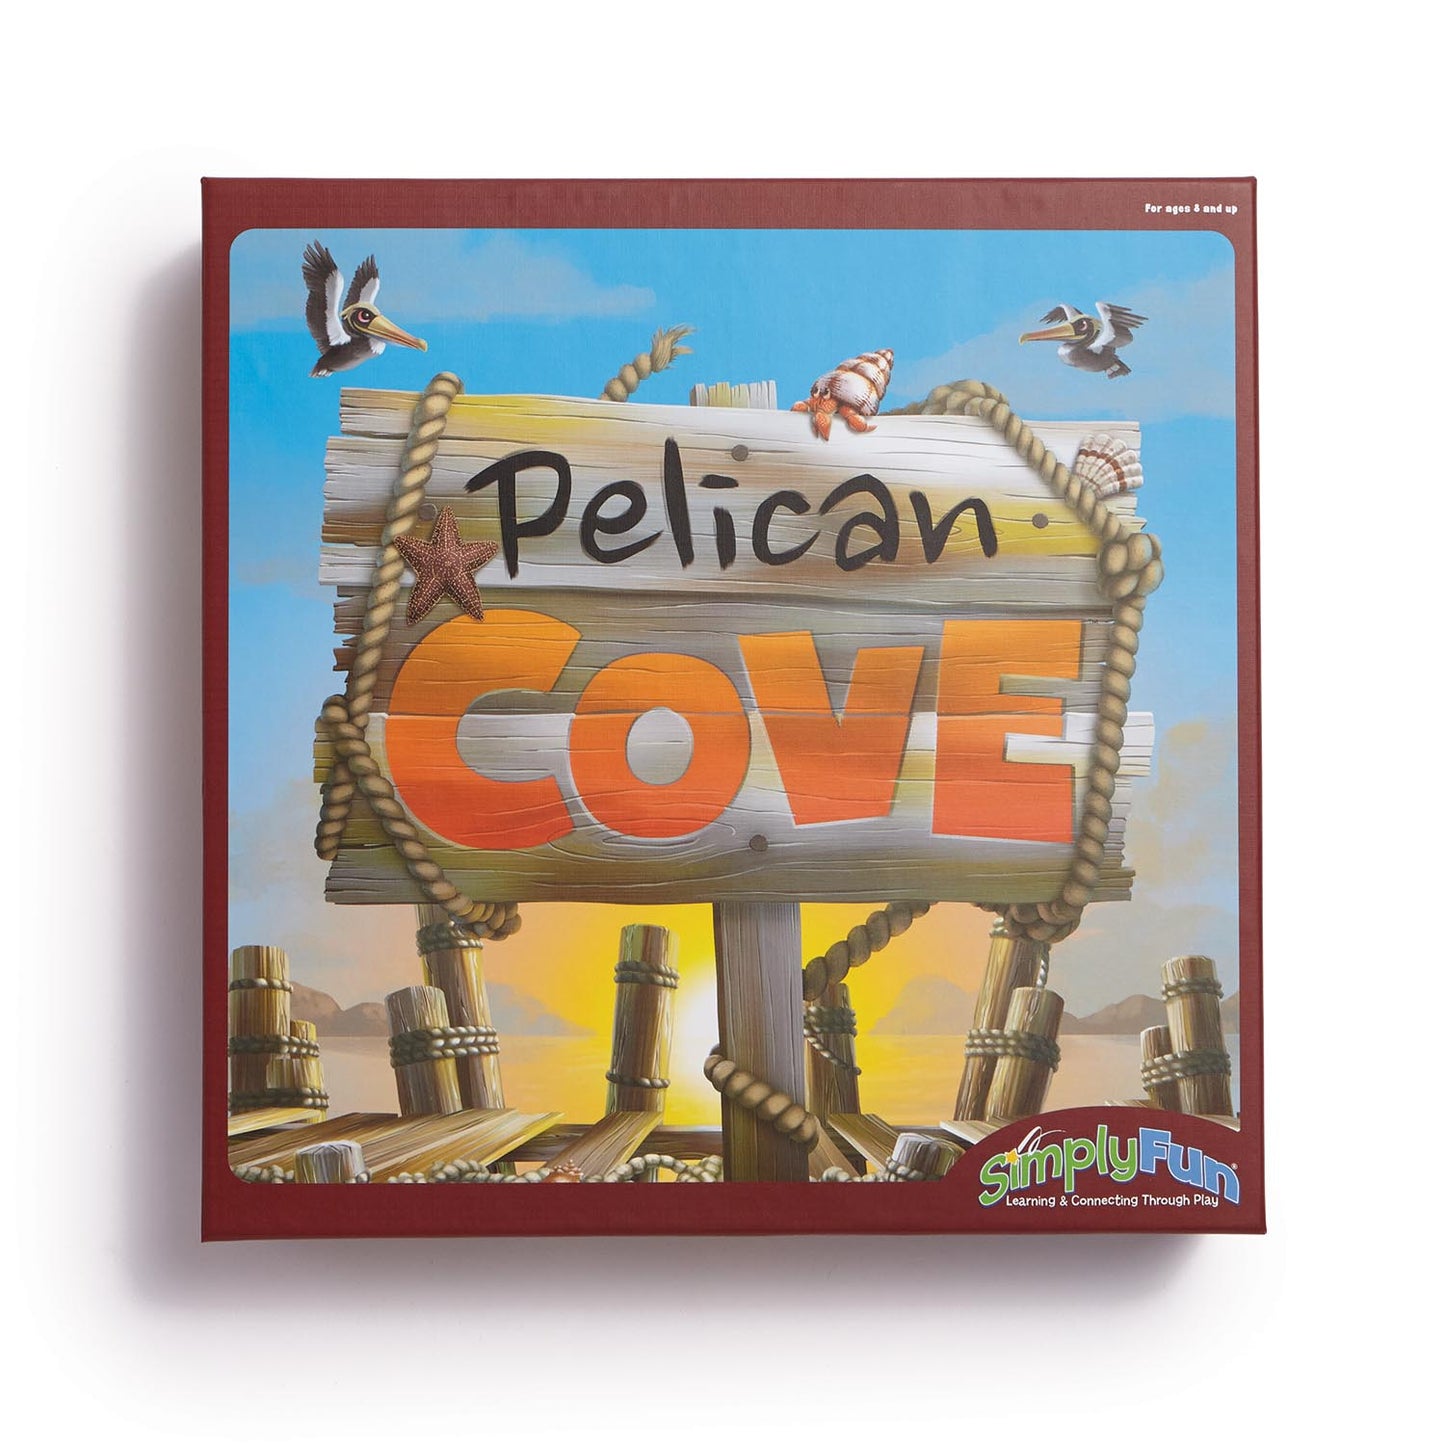 Pelican Cove: Algebra strategy board game